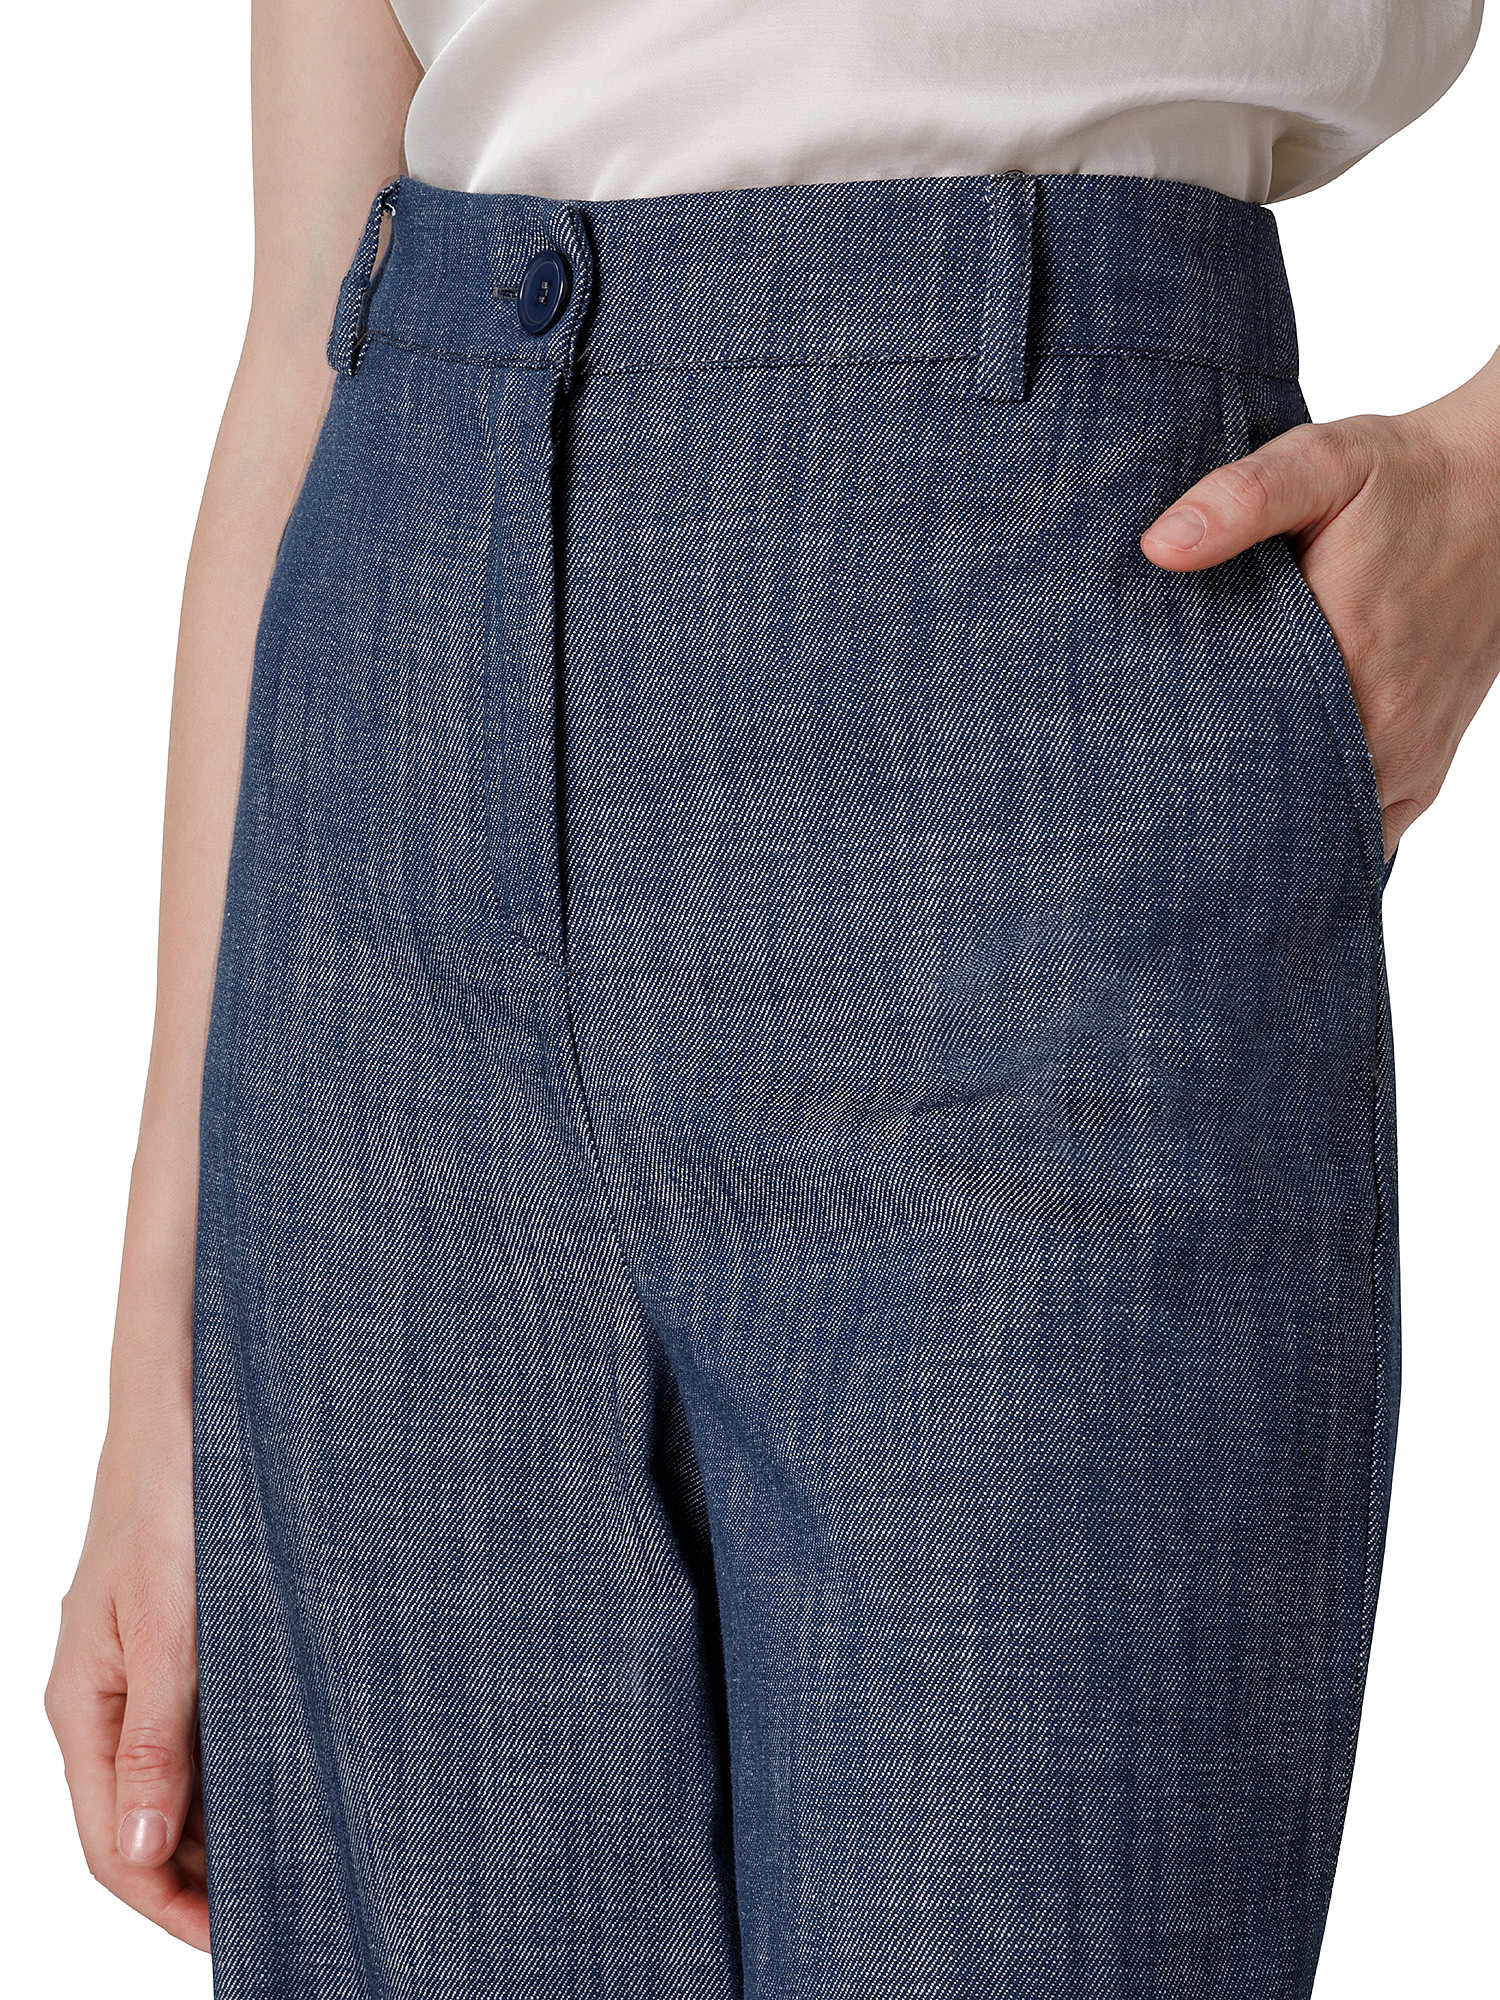 Pantalone cinque tasche, Denim, large image number 2